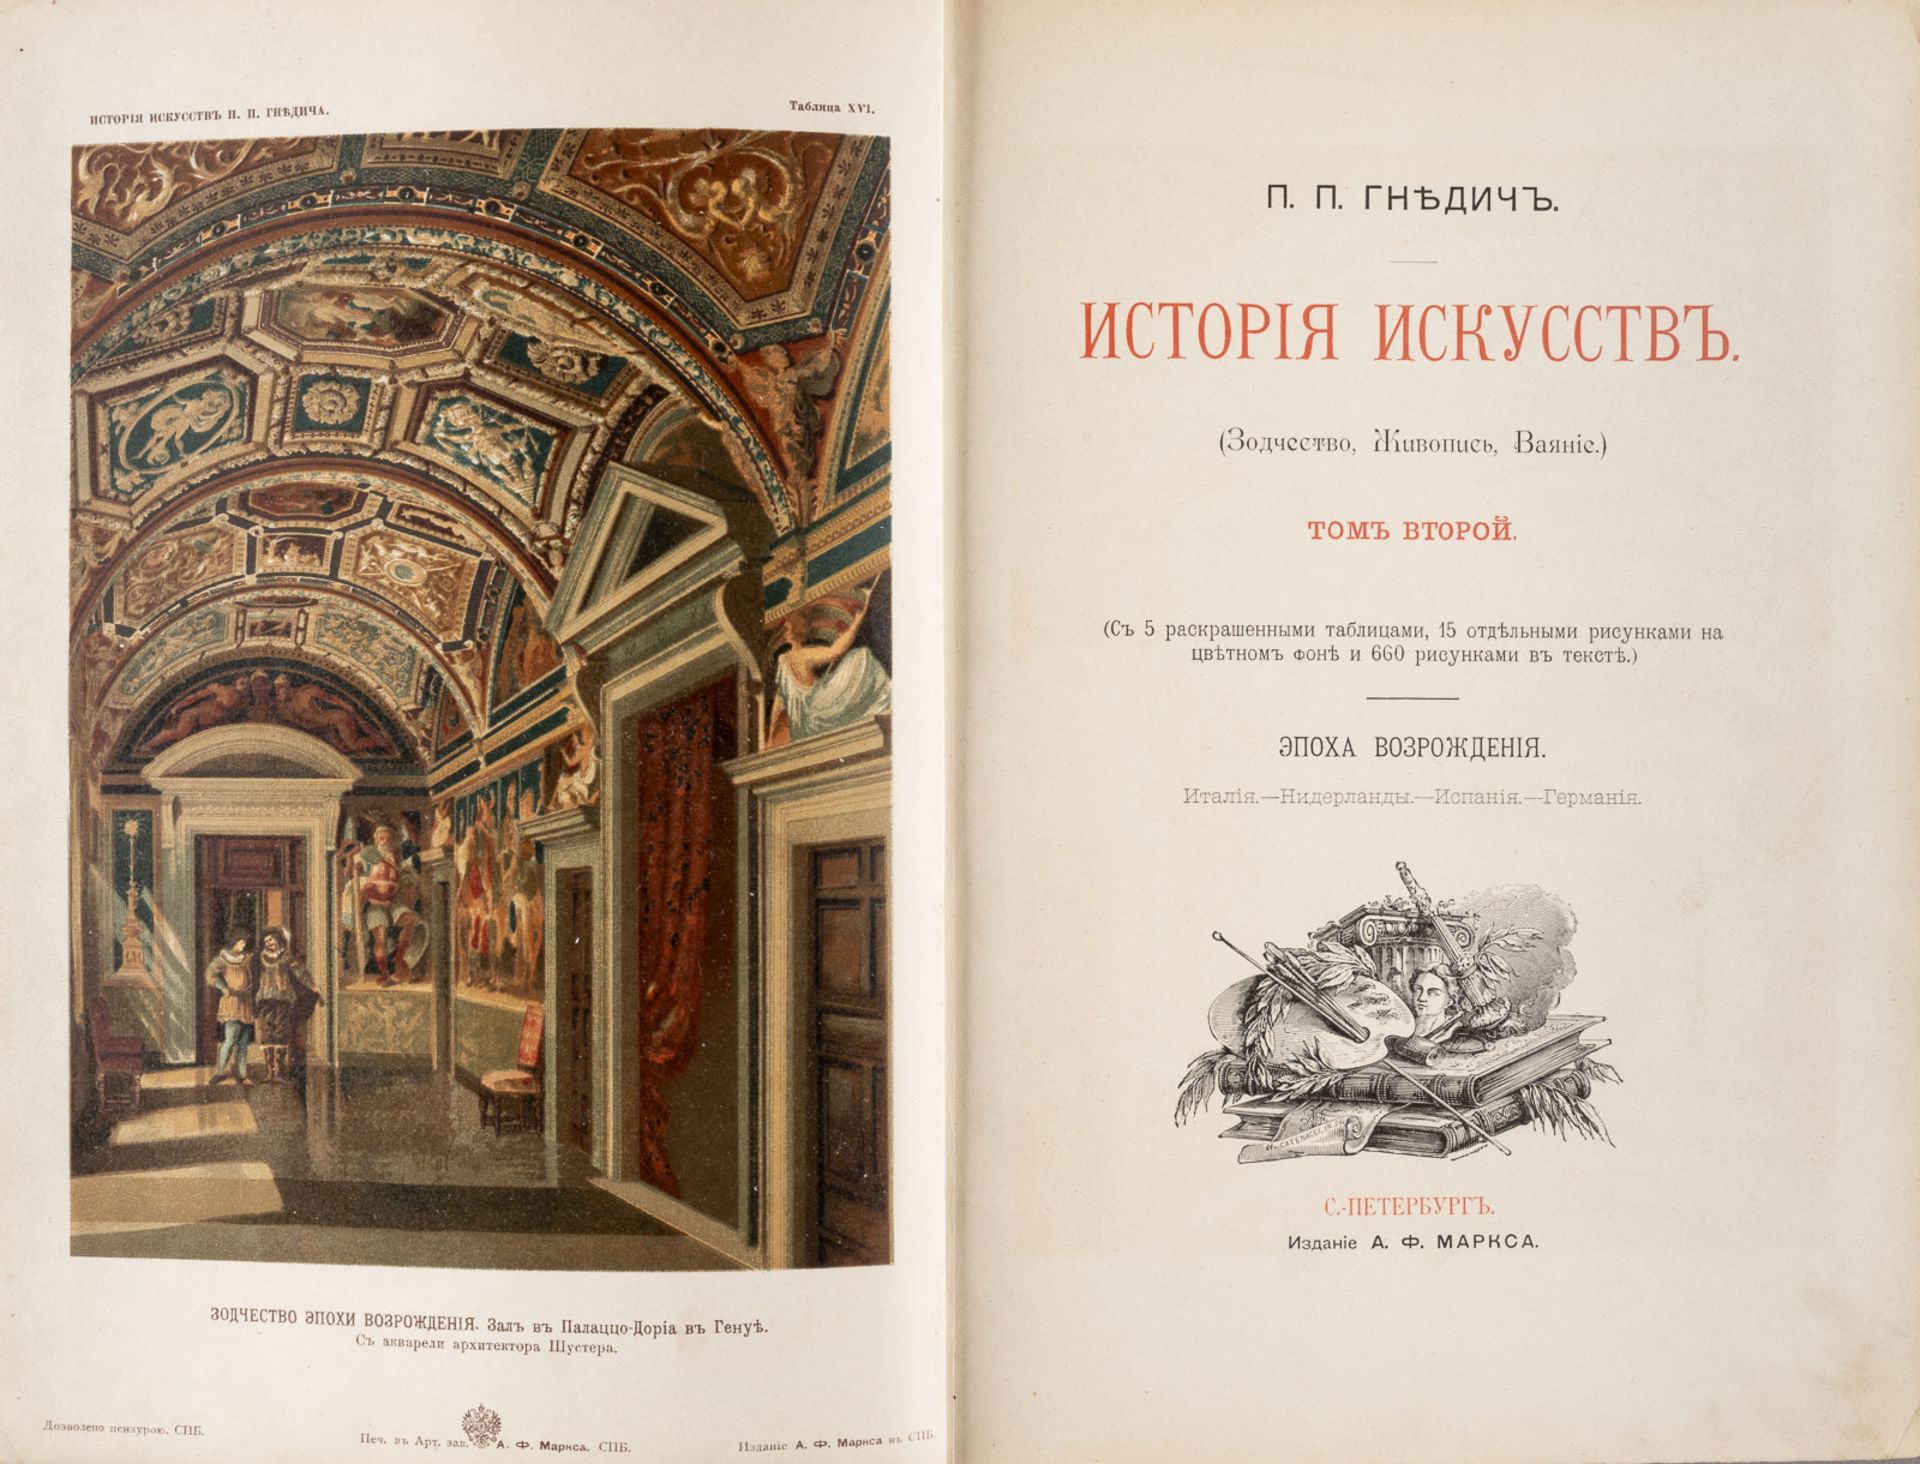 HISTORY OF ART', 3 VOLS  St. Petersburg, 1 edition, 1897, A.F. Marx  Hardback editions. 29 x 21 cm.  - Image 2 of 2